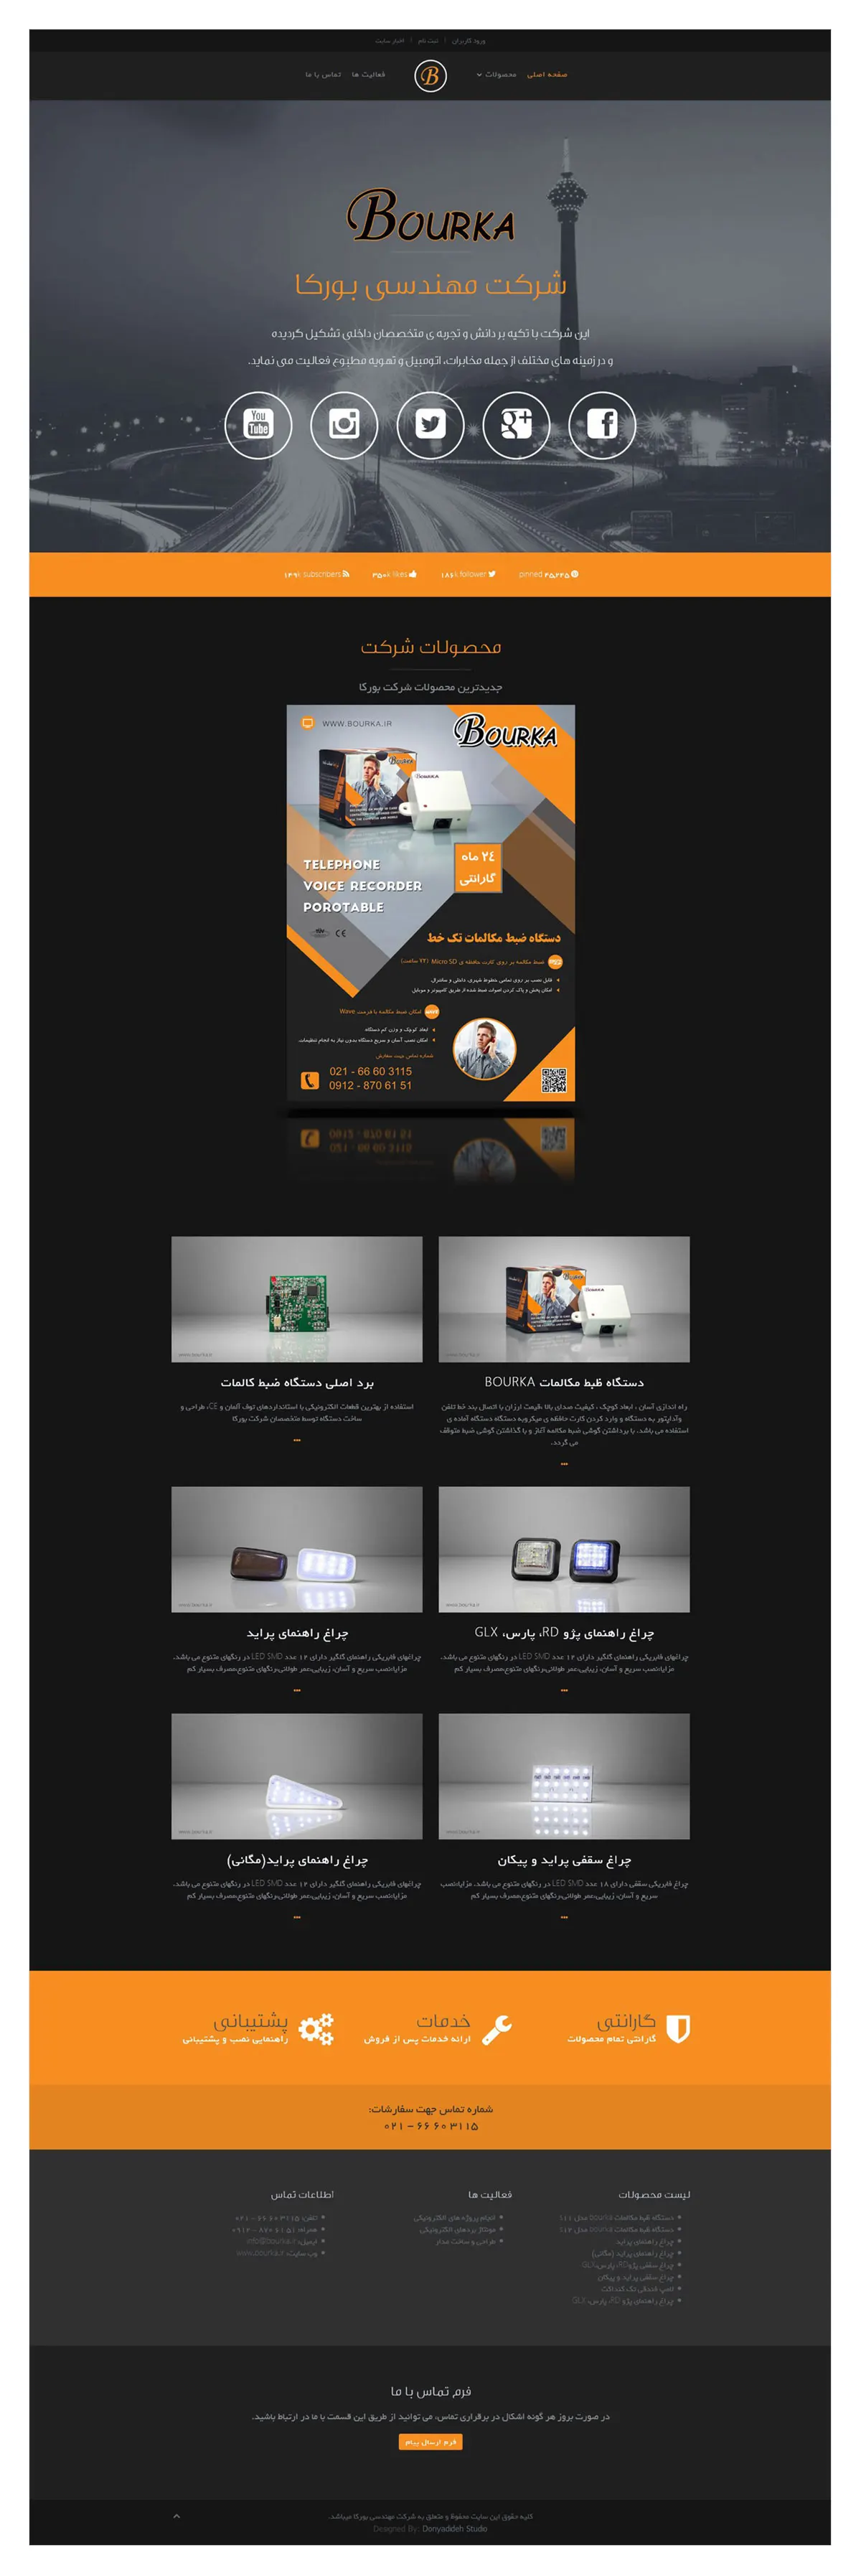 Bourka Company website development | Hossein Donyadideh